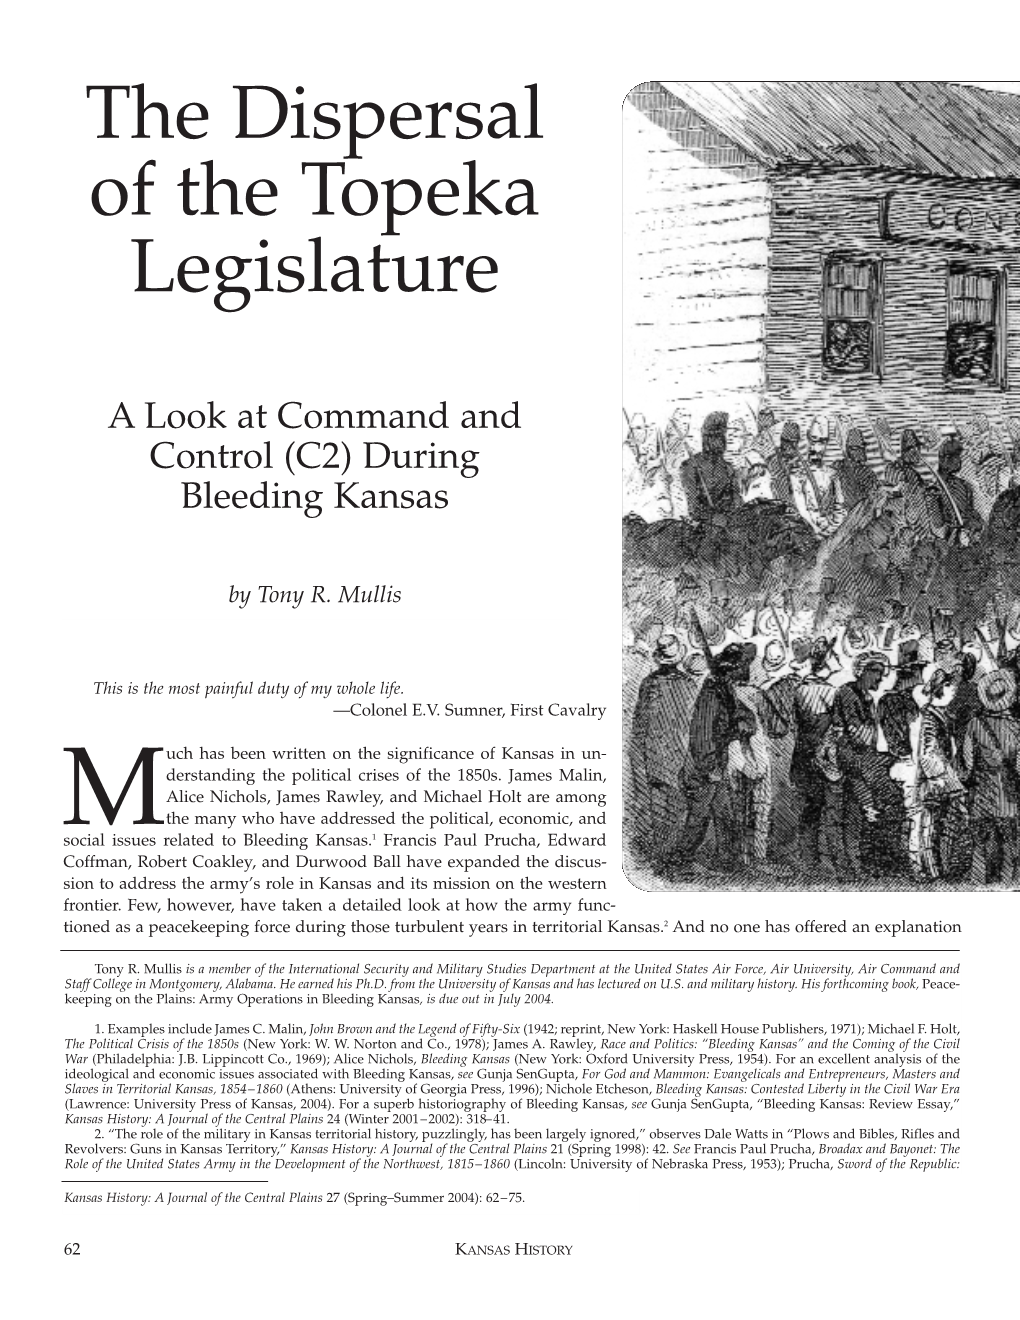 The Dispersal of the Topeka Legislature